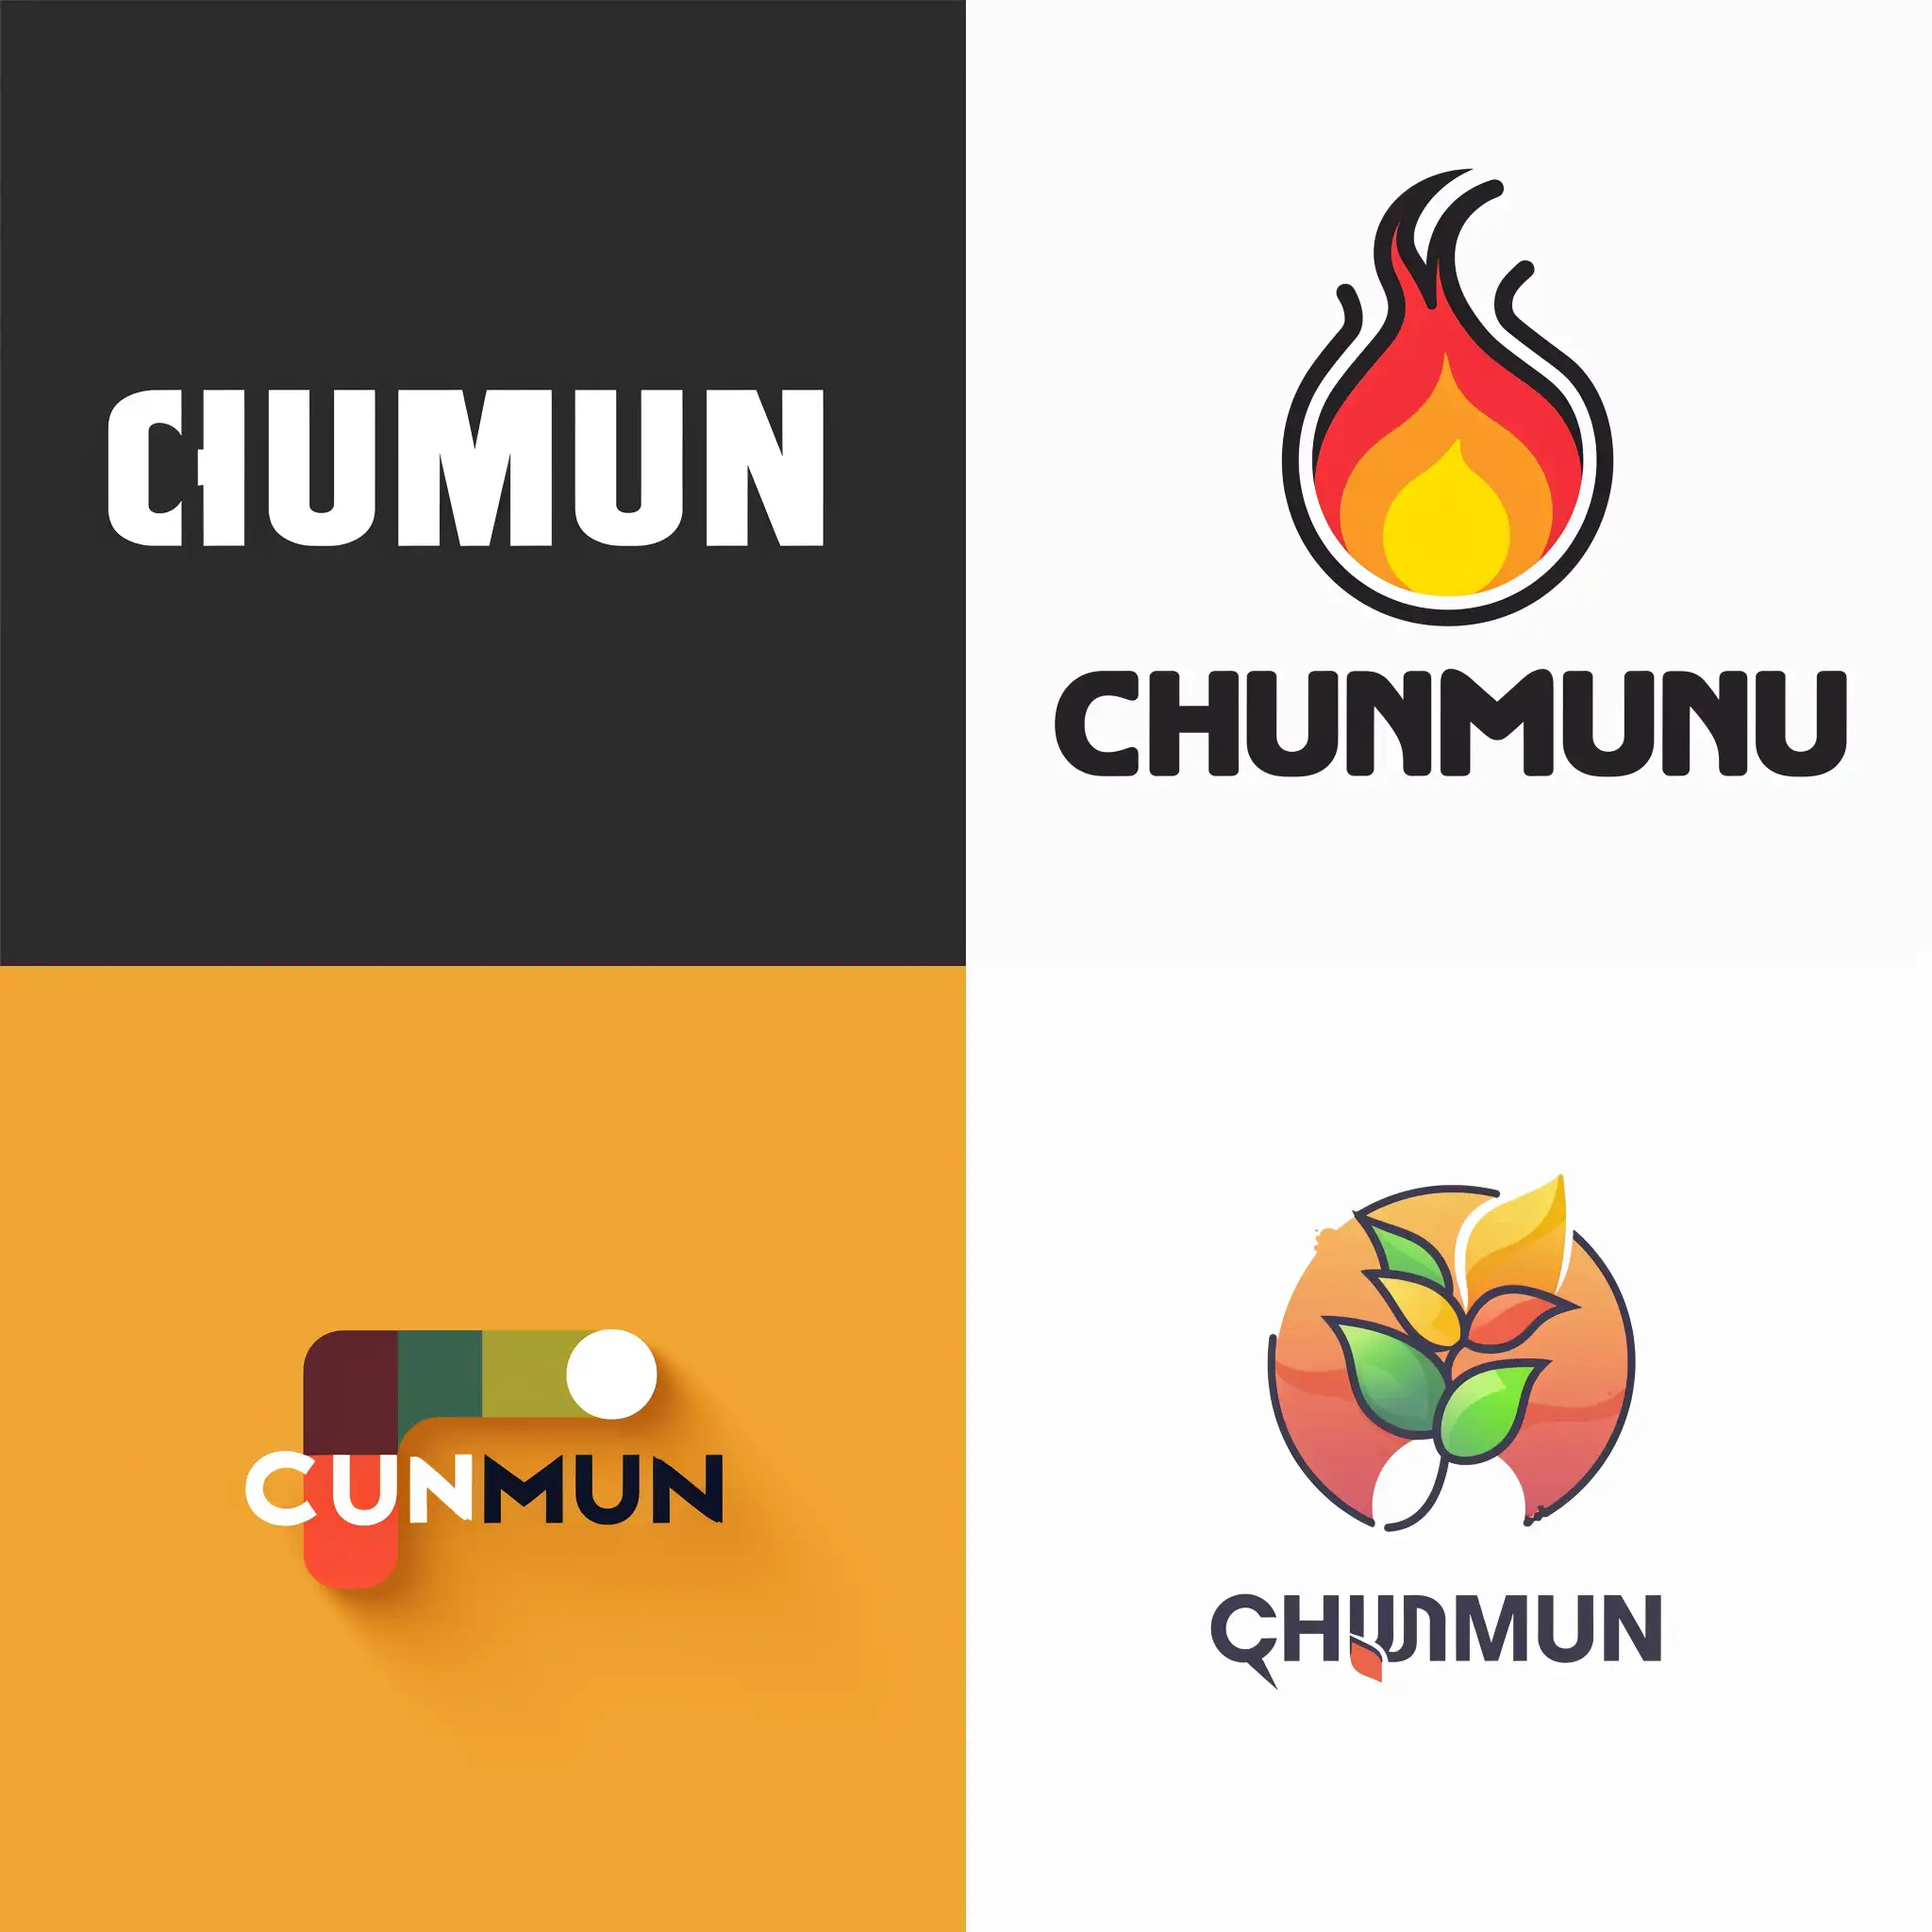 Chunmun-Name-Logo-Version-6-Creative-Aspect-Ratio-Design-with-25216-Variations